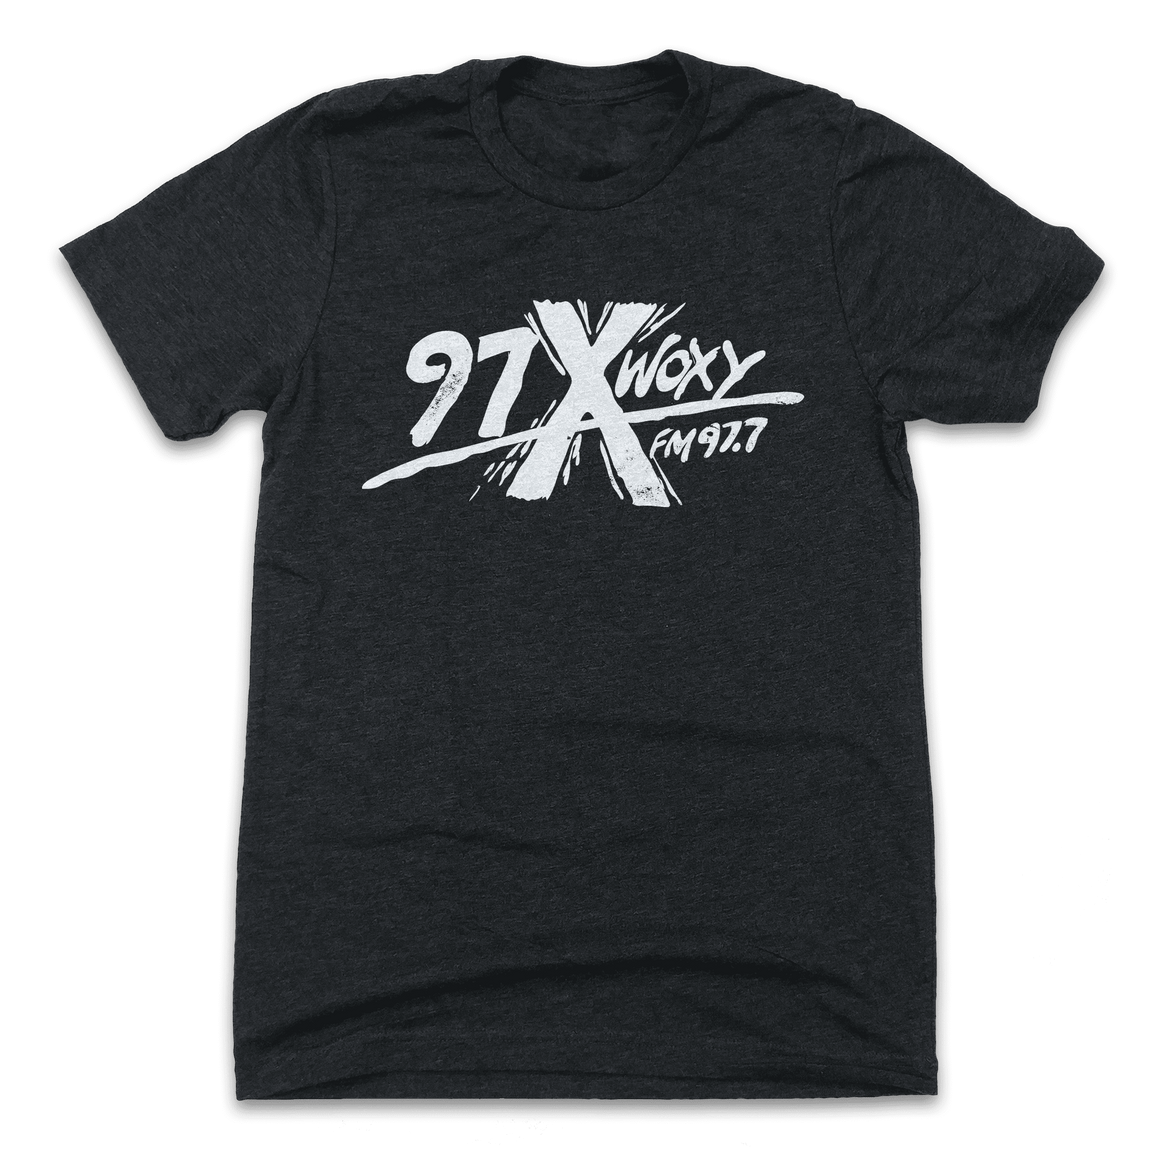 97X WOXY - Cincy Shirts